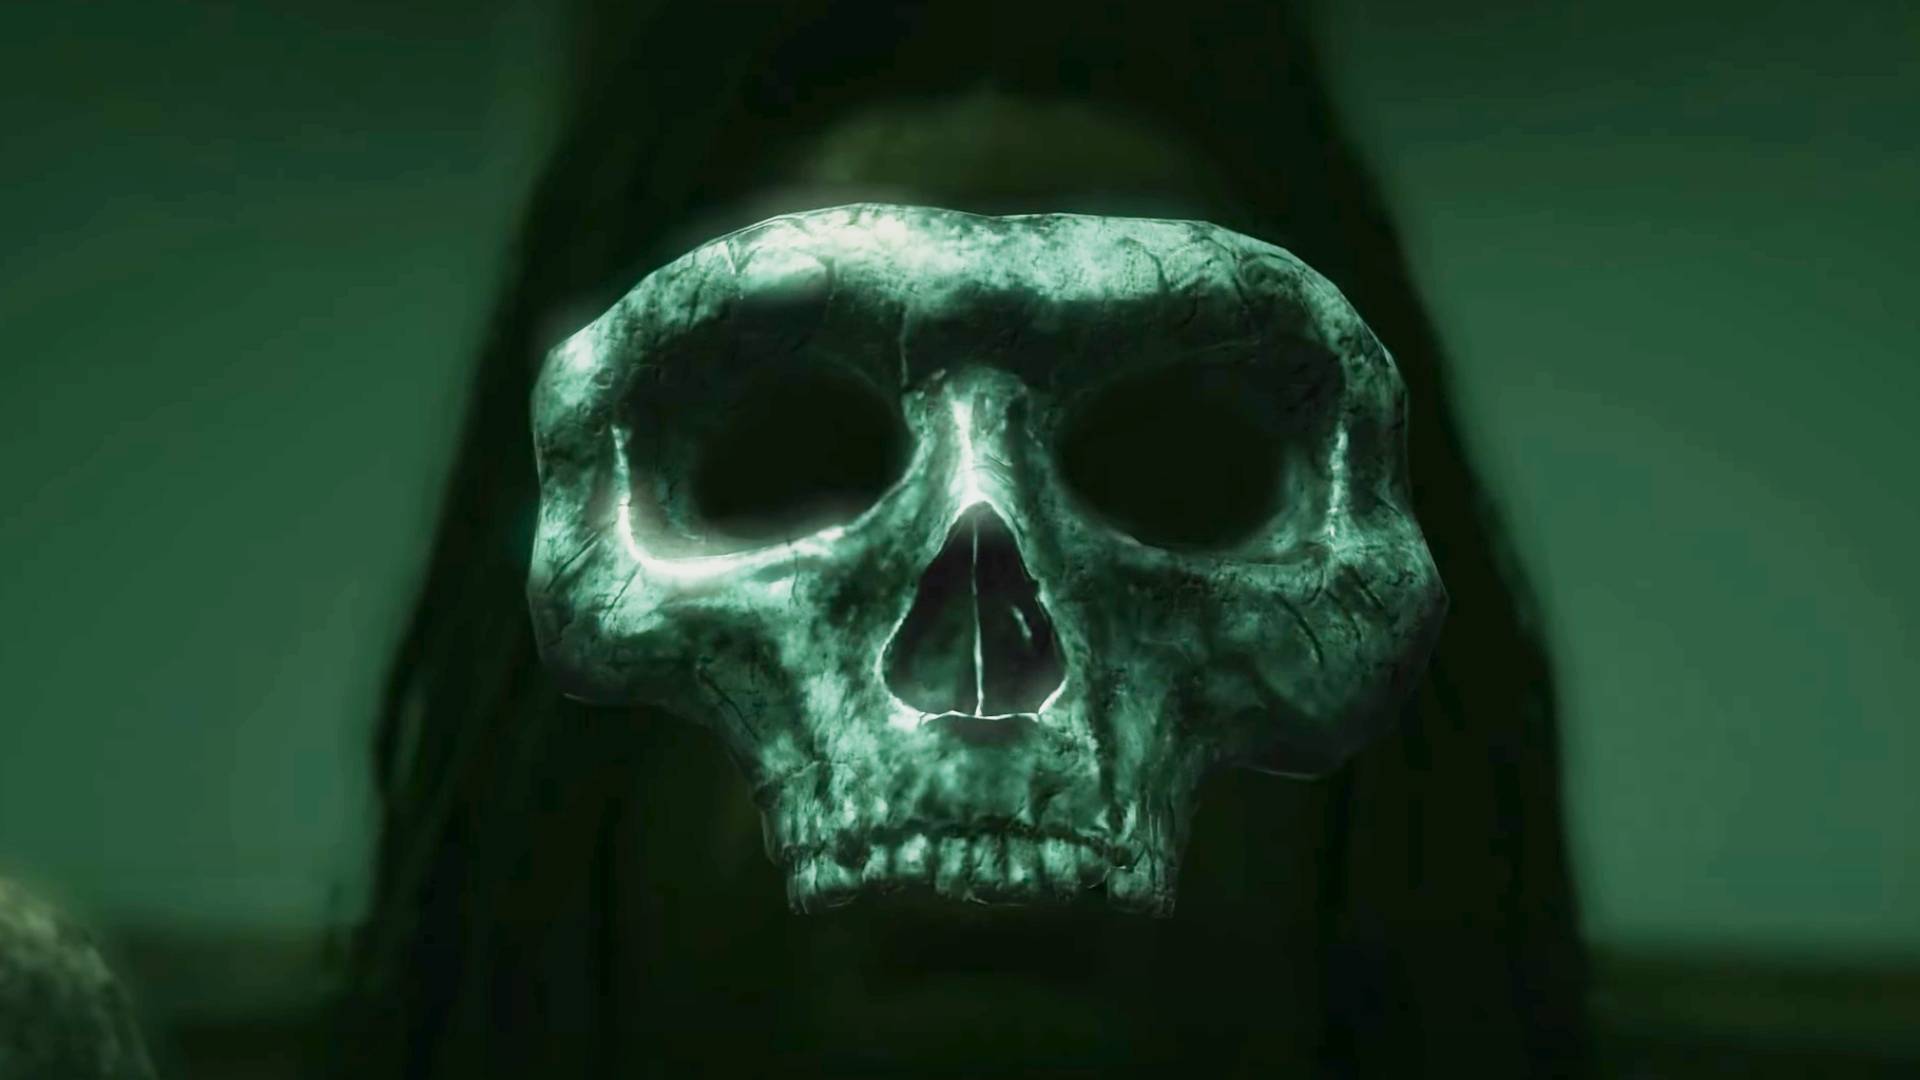 Skull and Bones – Closed Beta 2